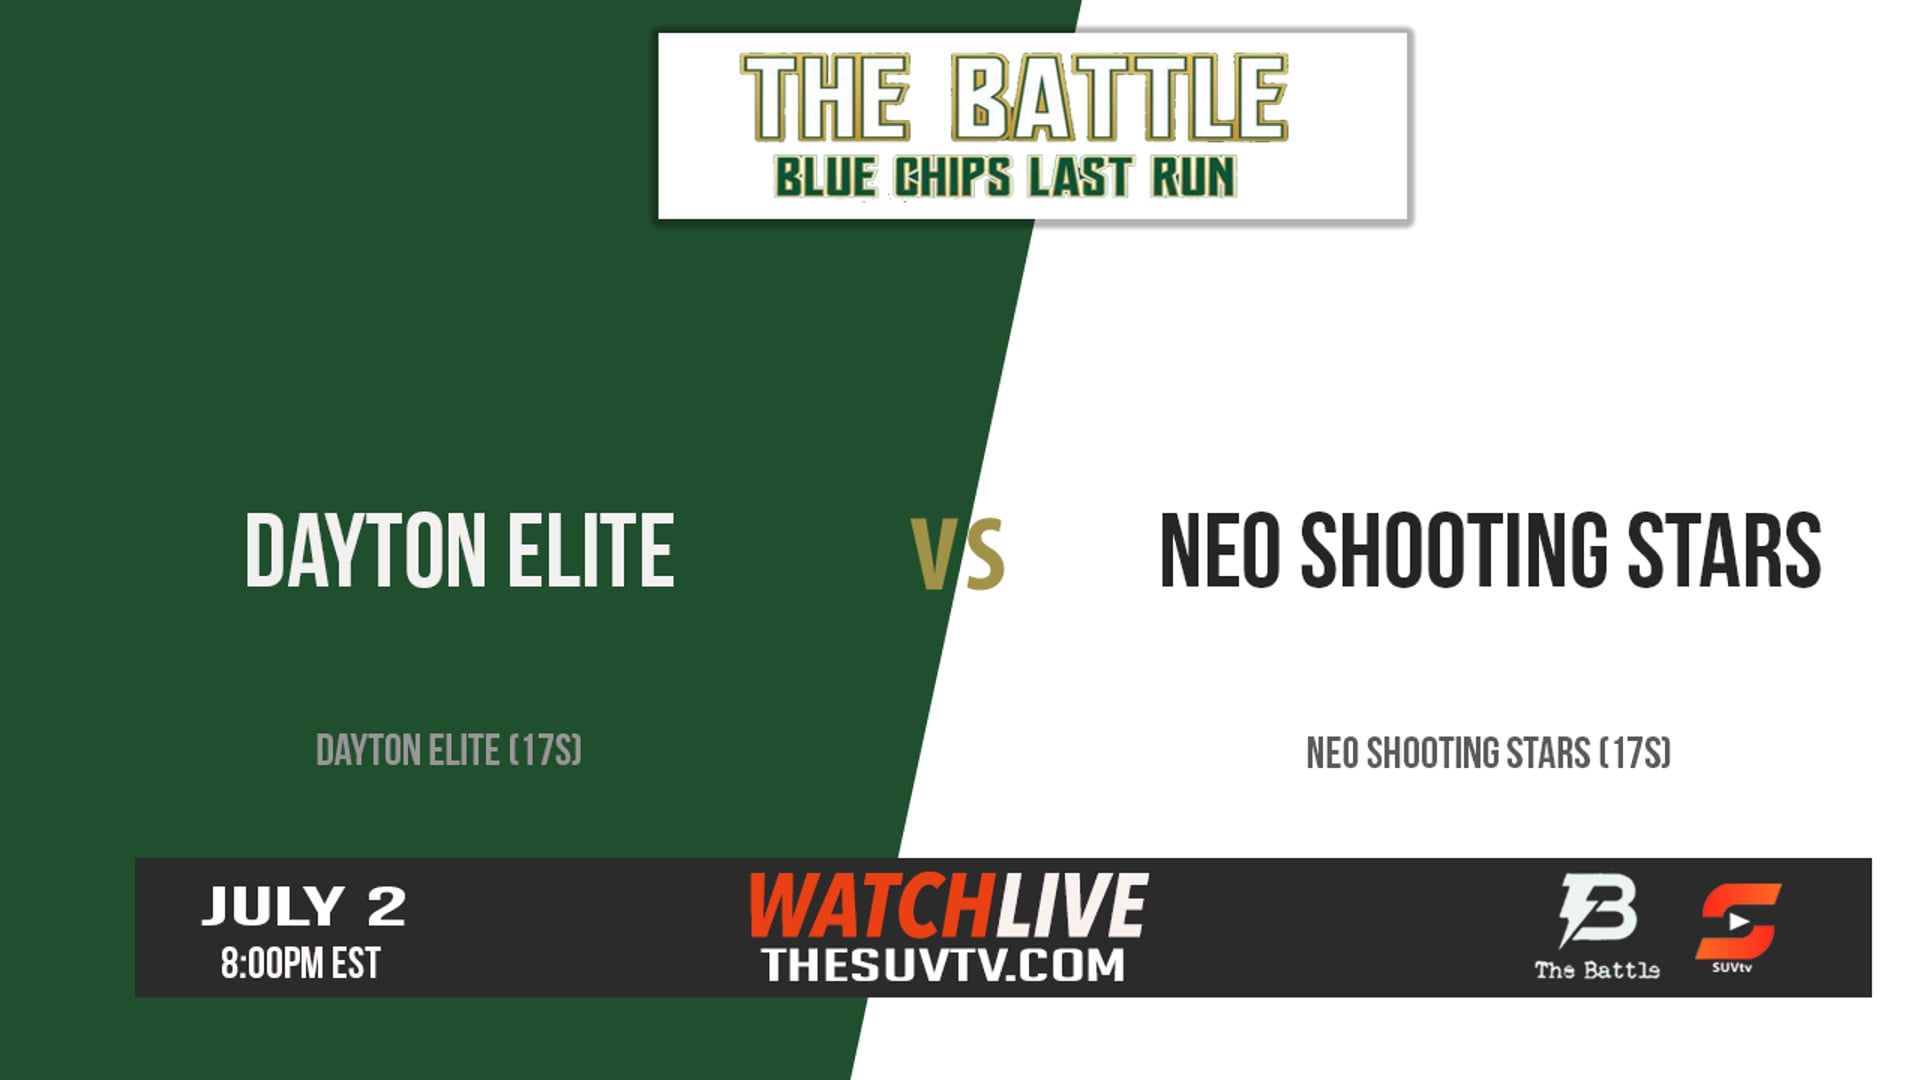 Dayton Elite vs. Neo Shooting Stars (17S)